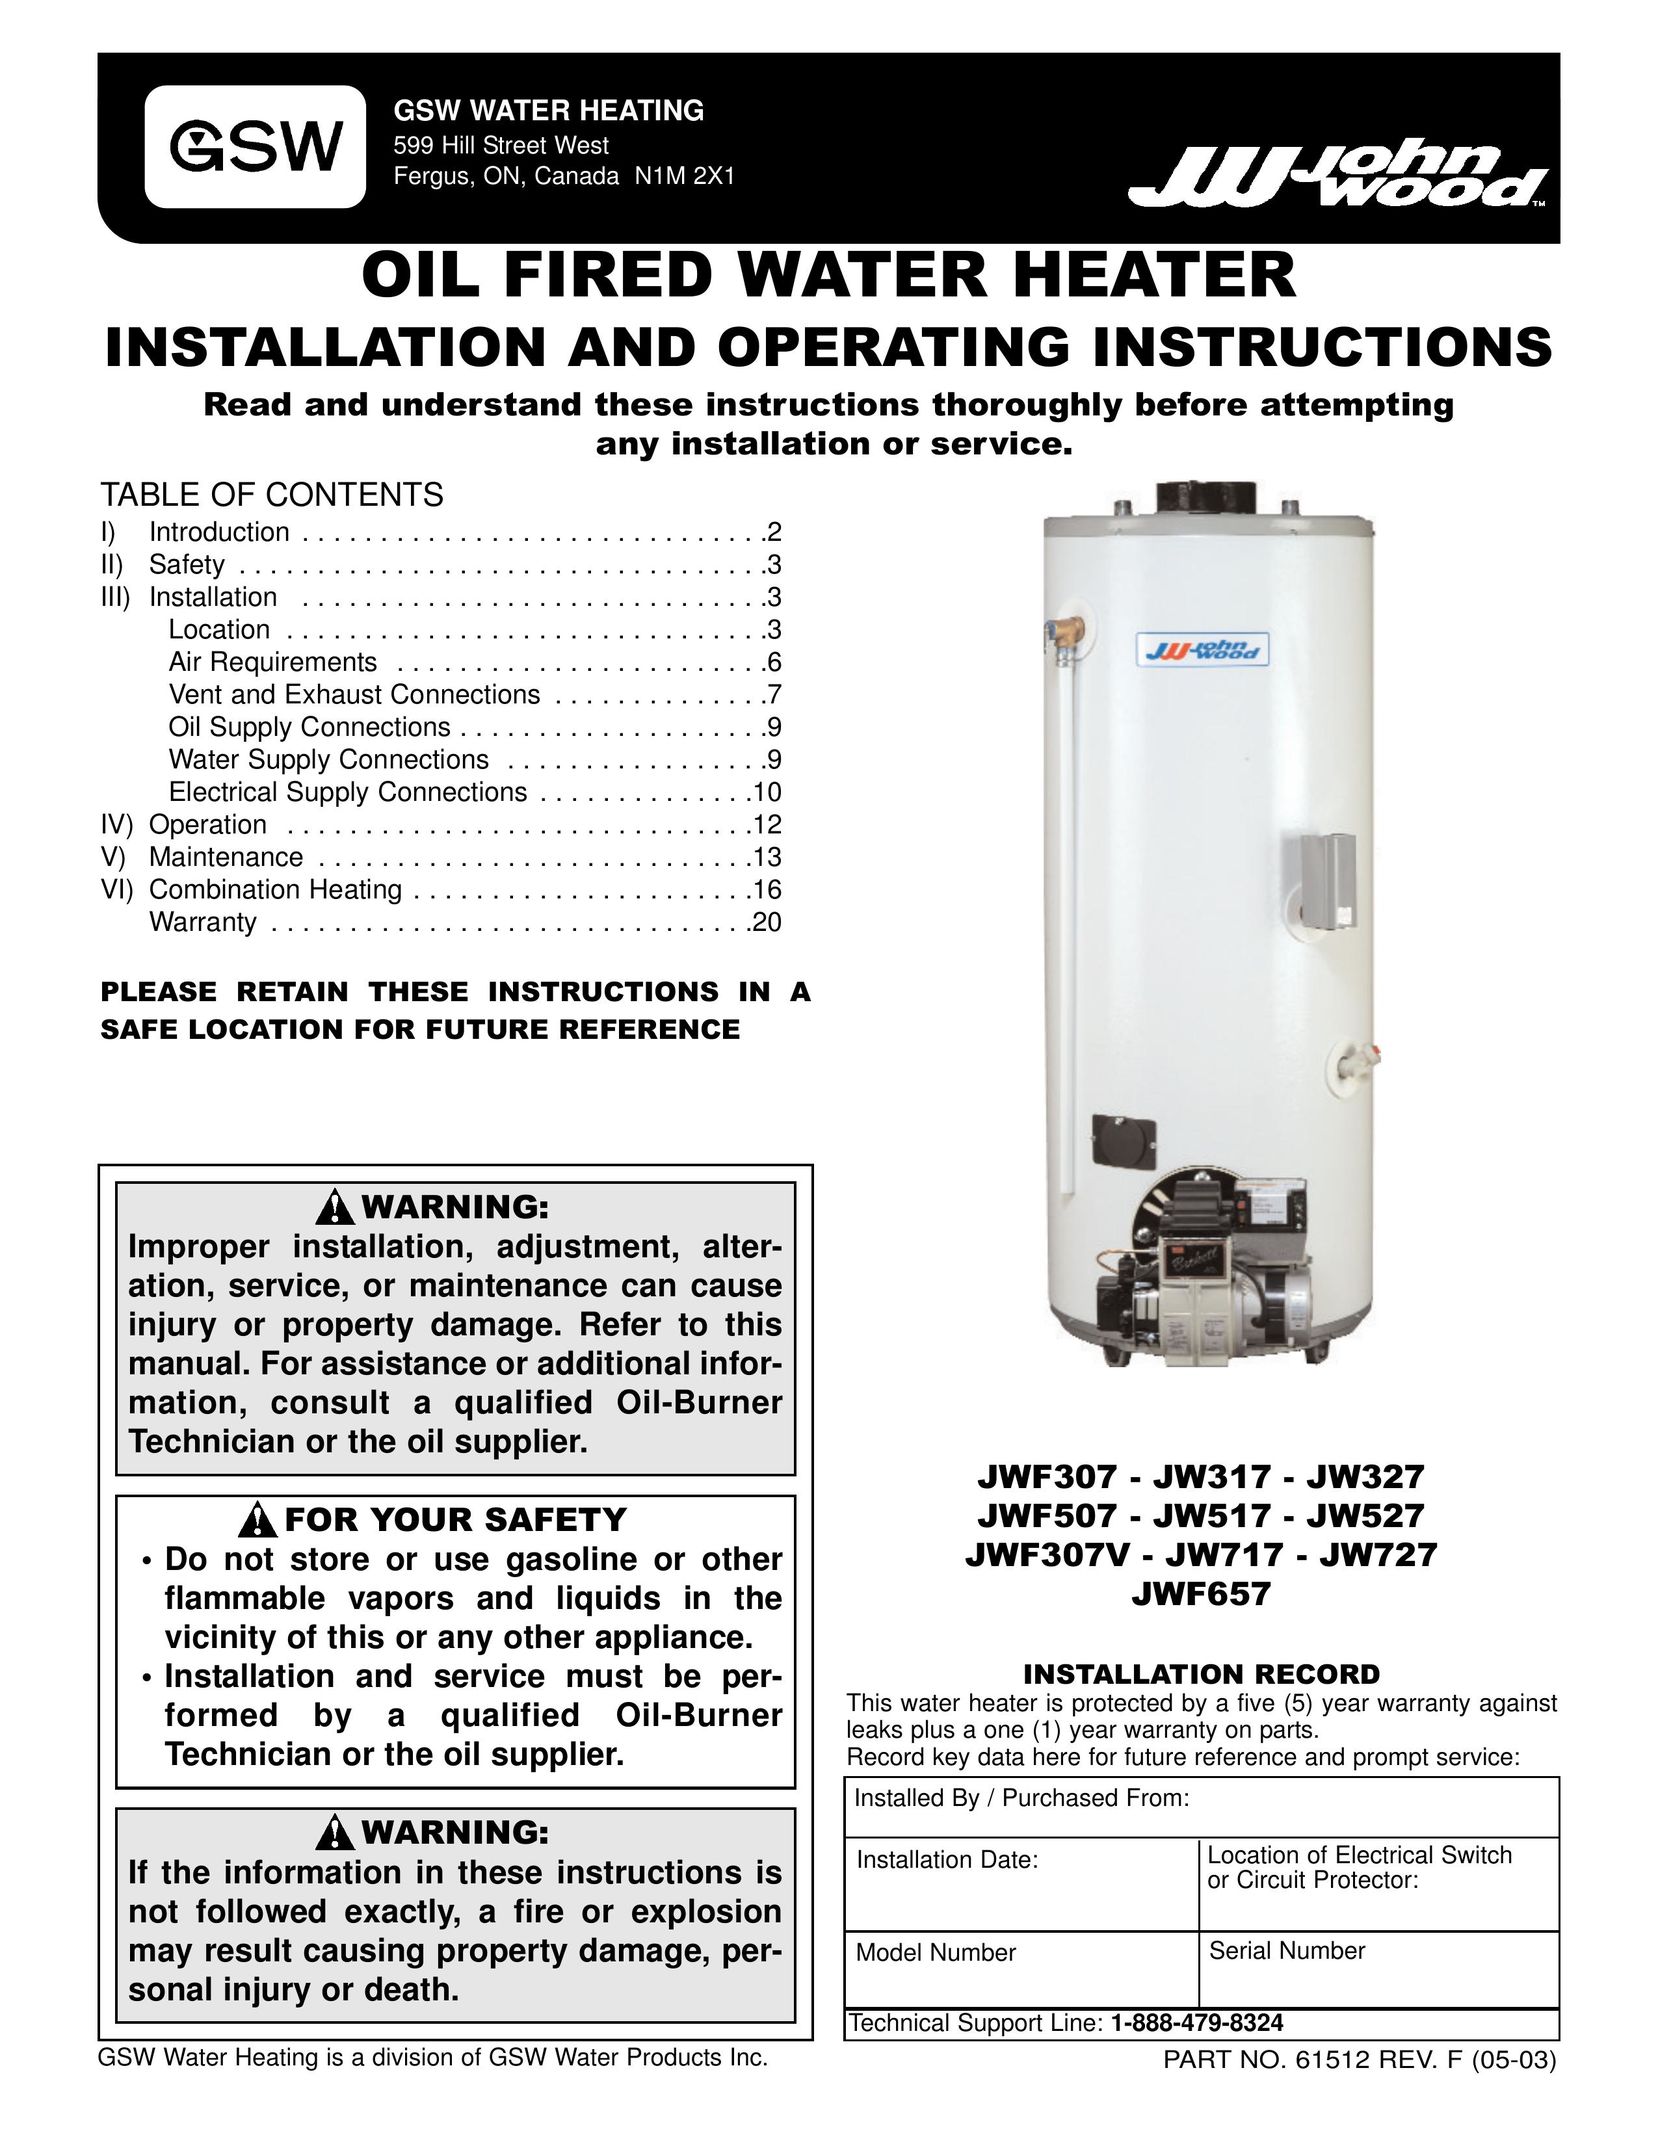 GSW JW517 Water Heater User Manual